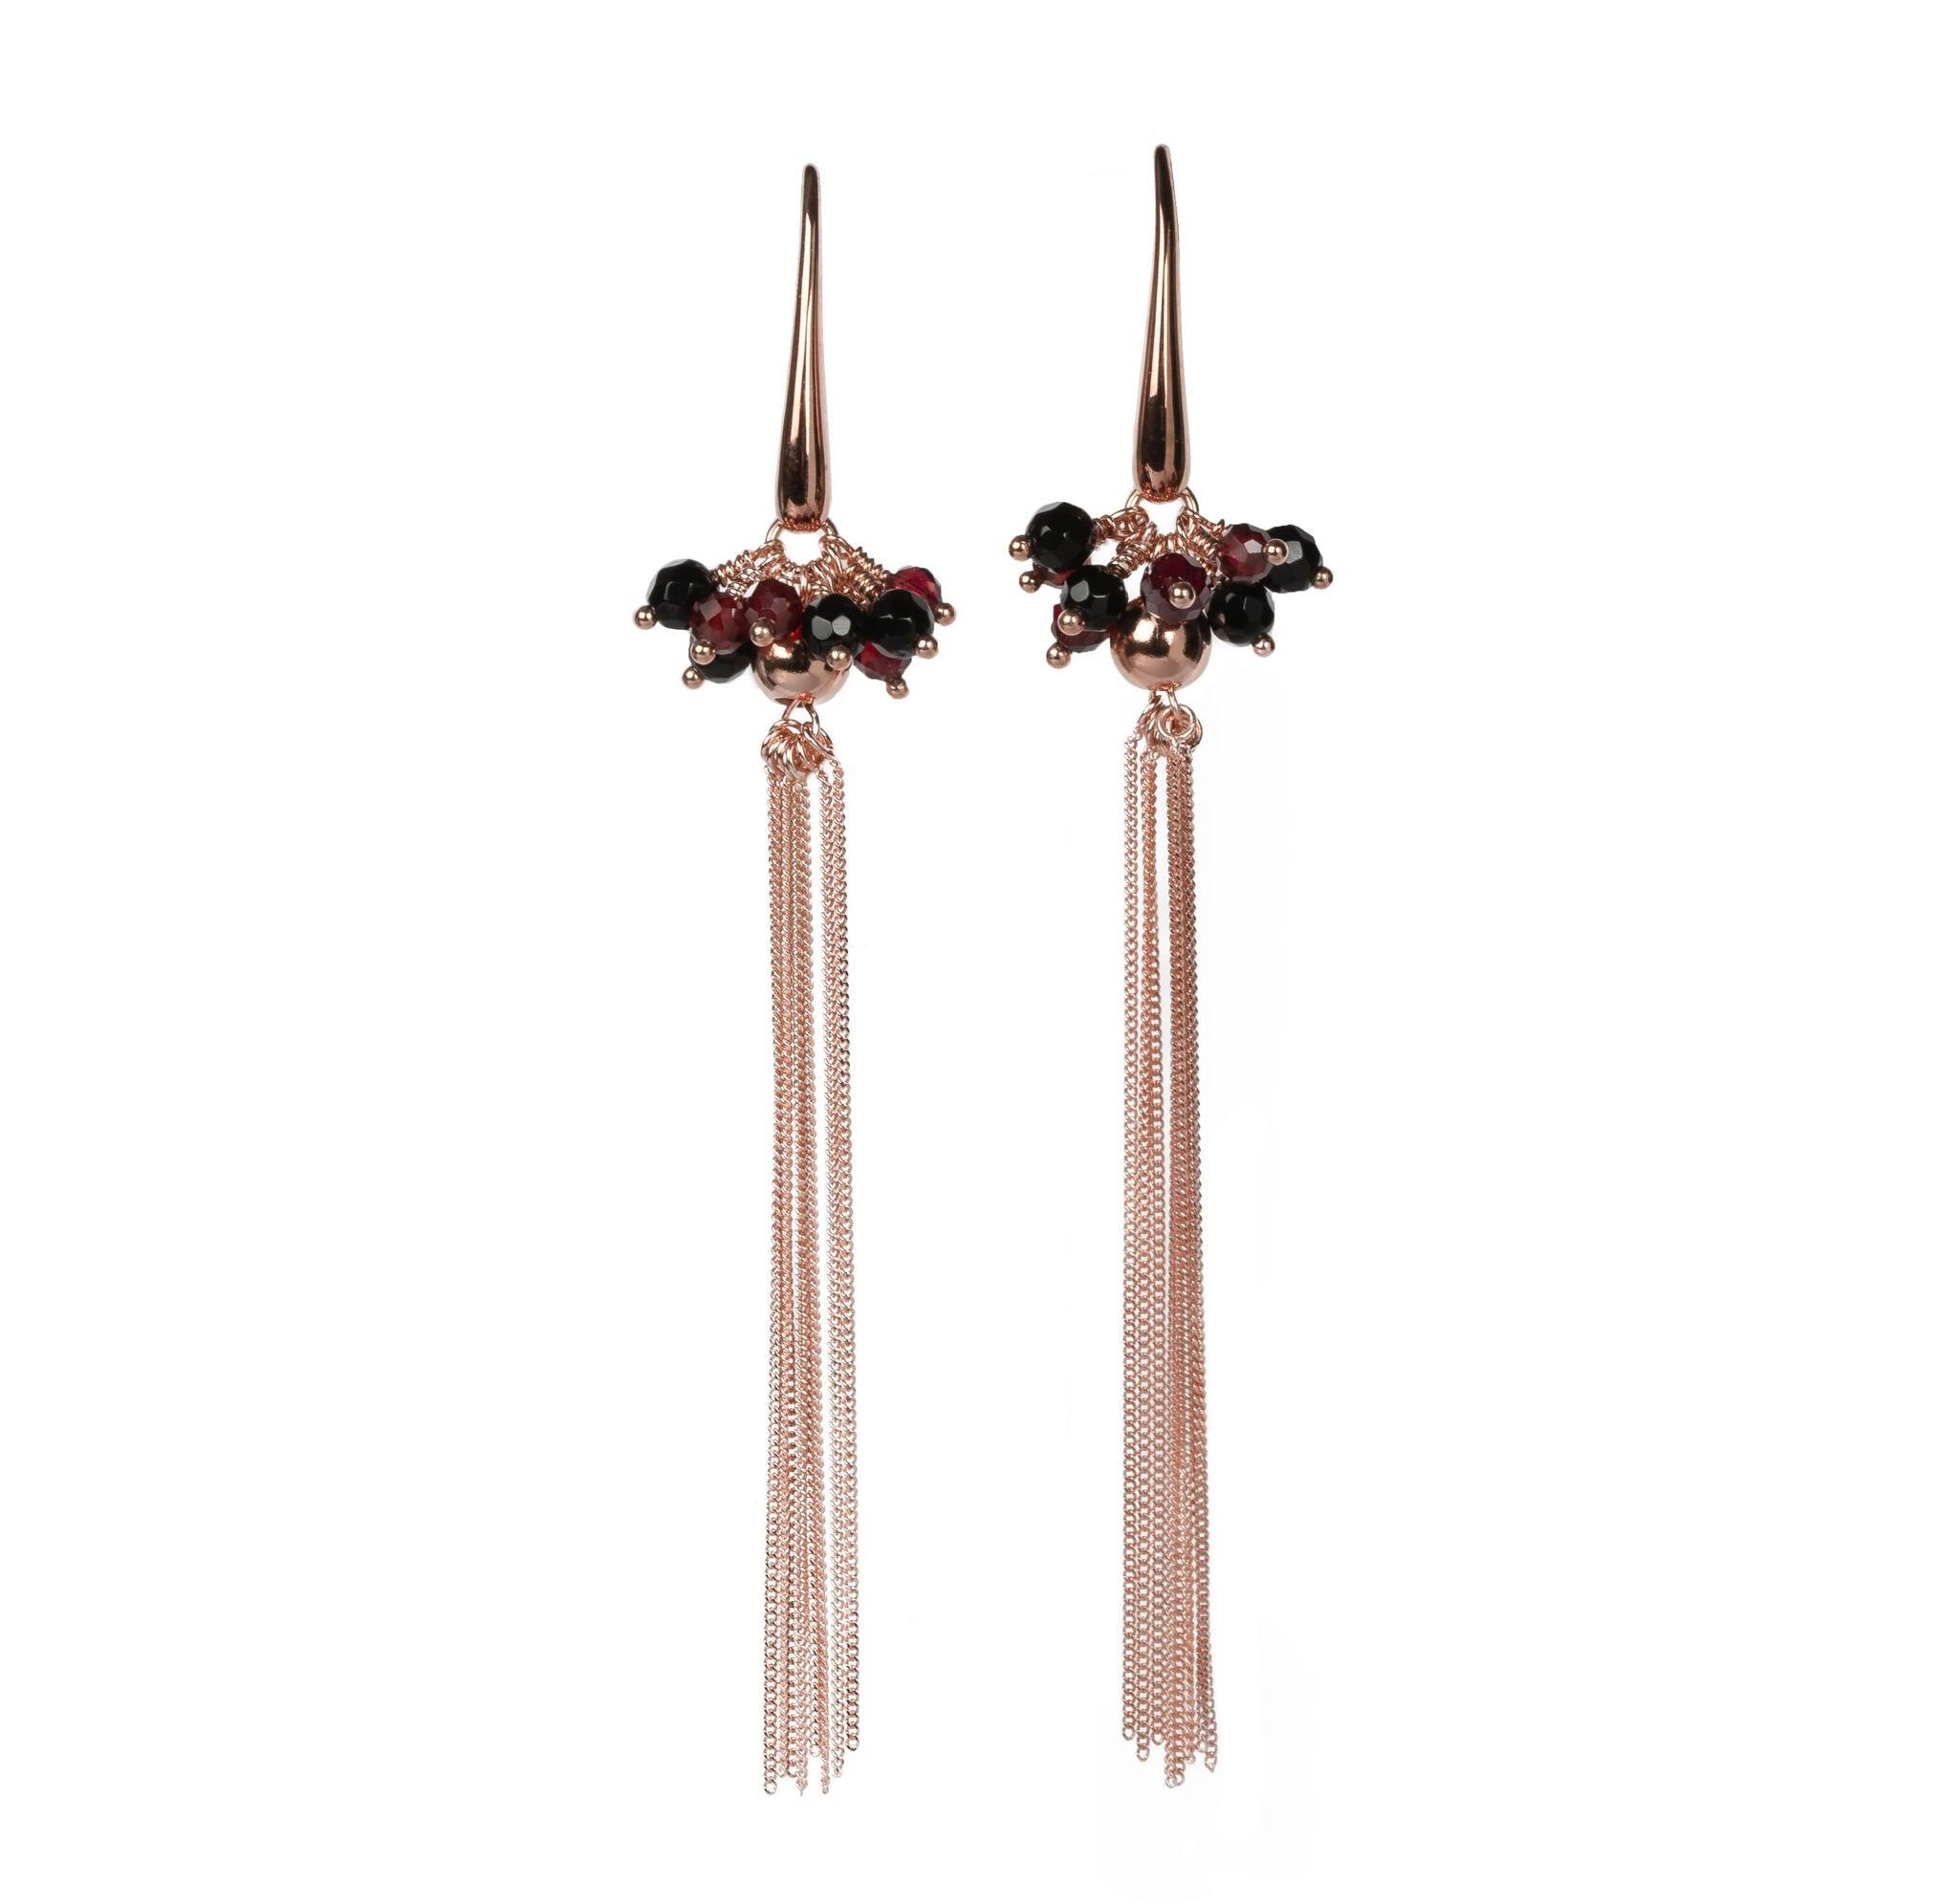 Cherie Black Tassel Earrings - Rose Gold and Silver - RUUD Studios